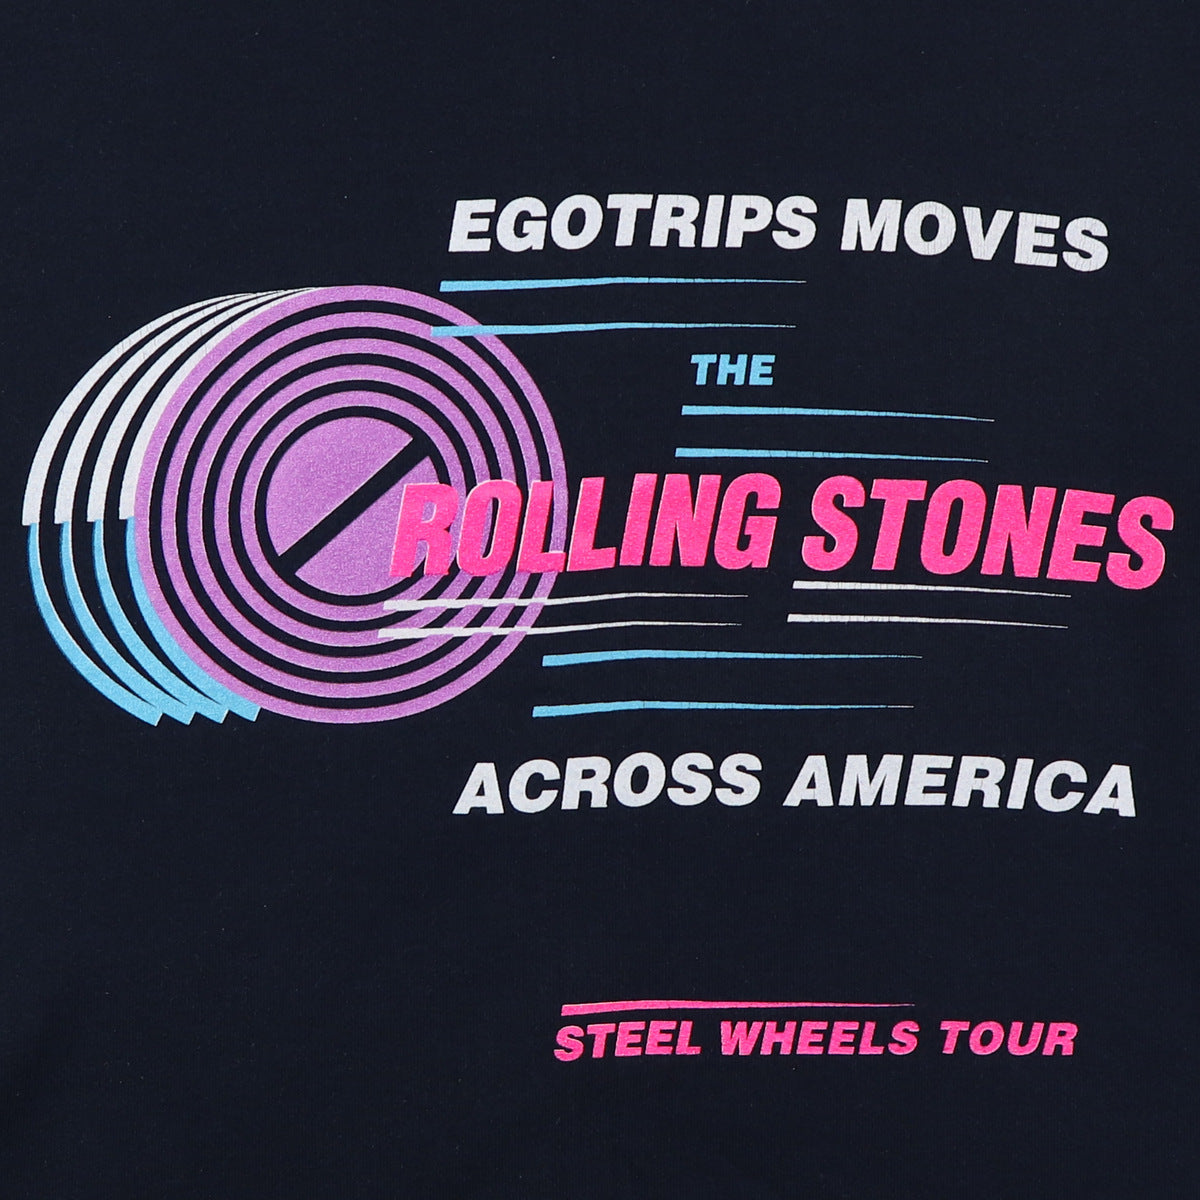 1989 Rolling Stones Ego Trips Crew Tour Sweatshirt